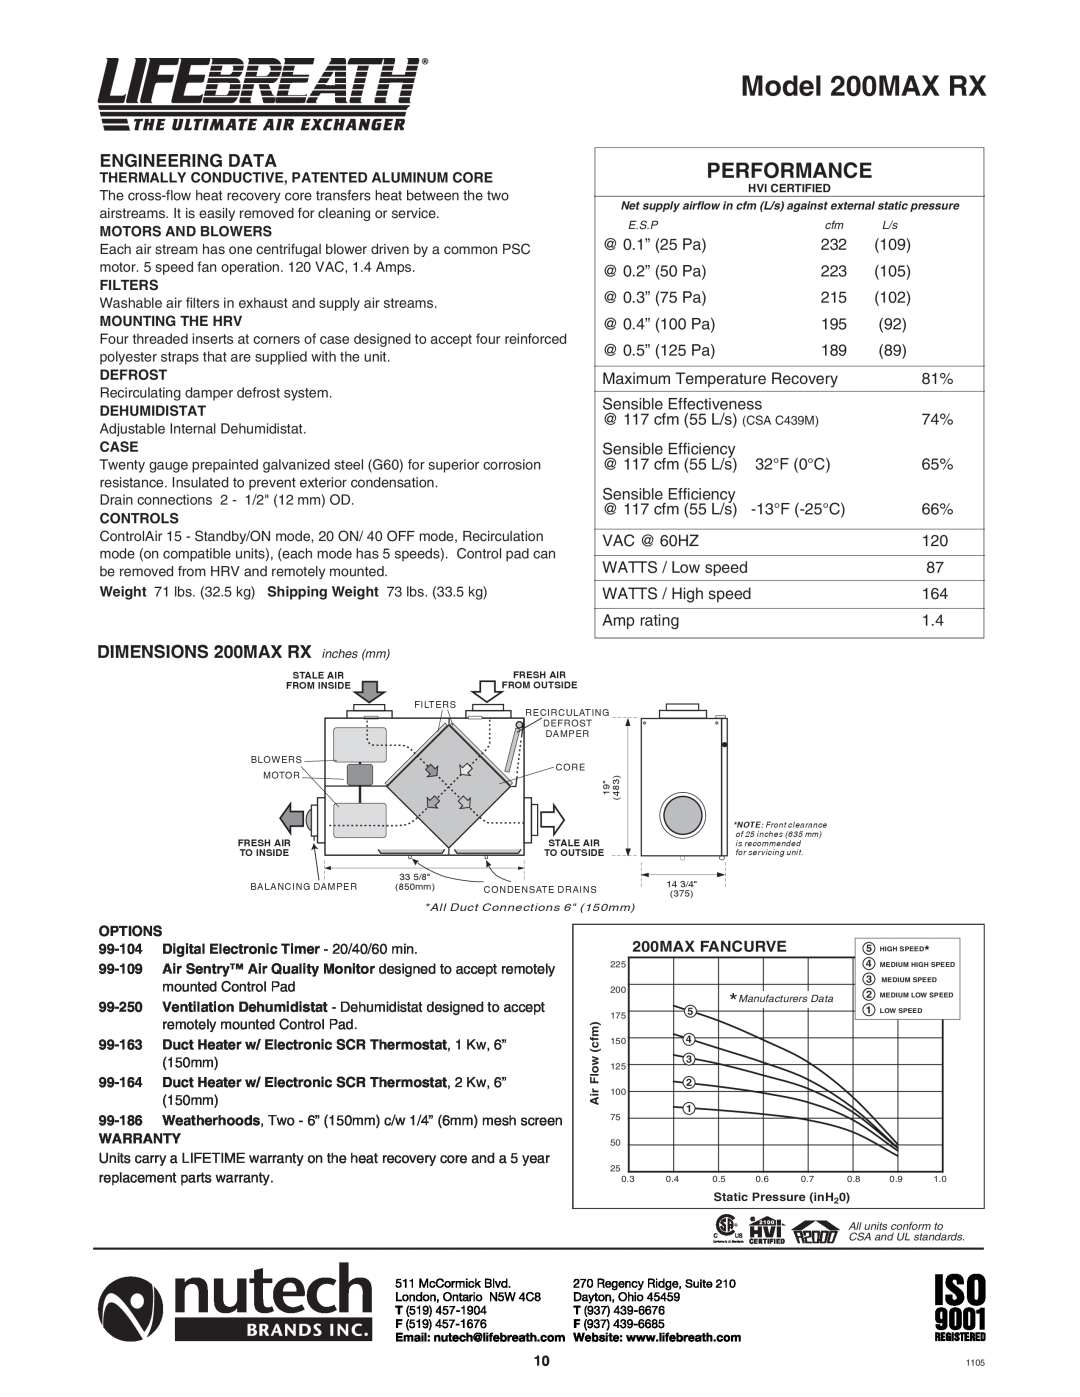 Lifebreath 155ECM, 155MAX RX installation manual Model 200MAX RX, Engineering Data, DIMENSIONS 200MAX RX inches mm 